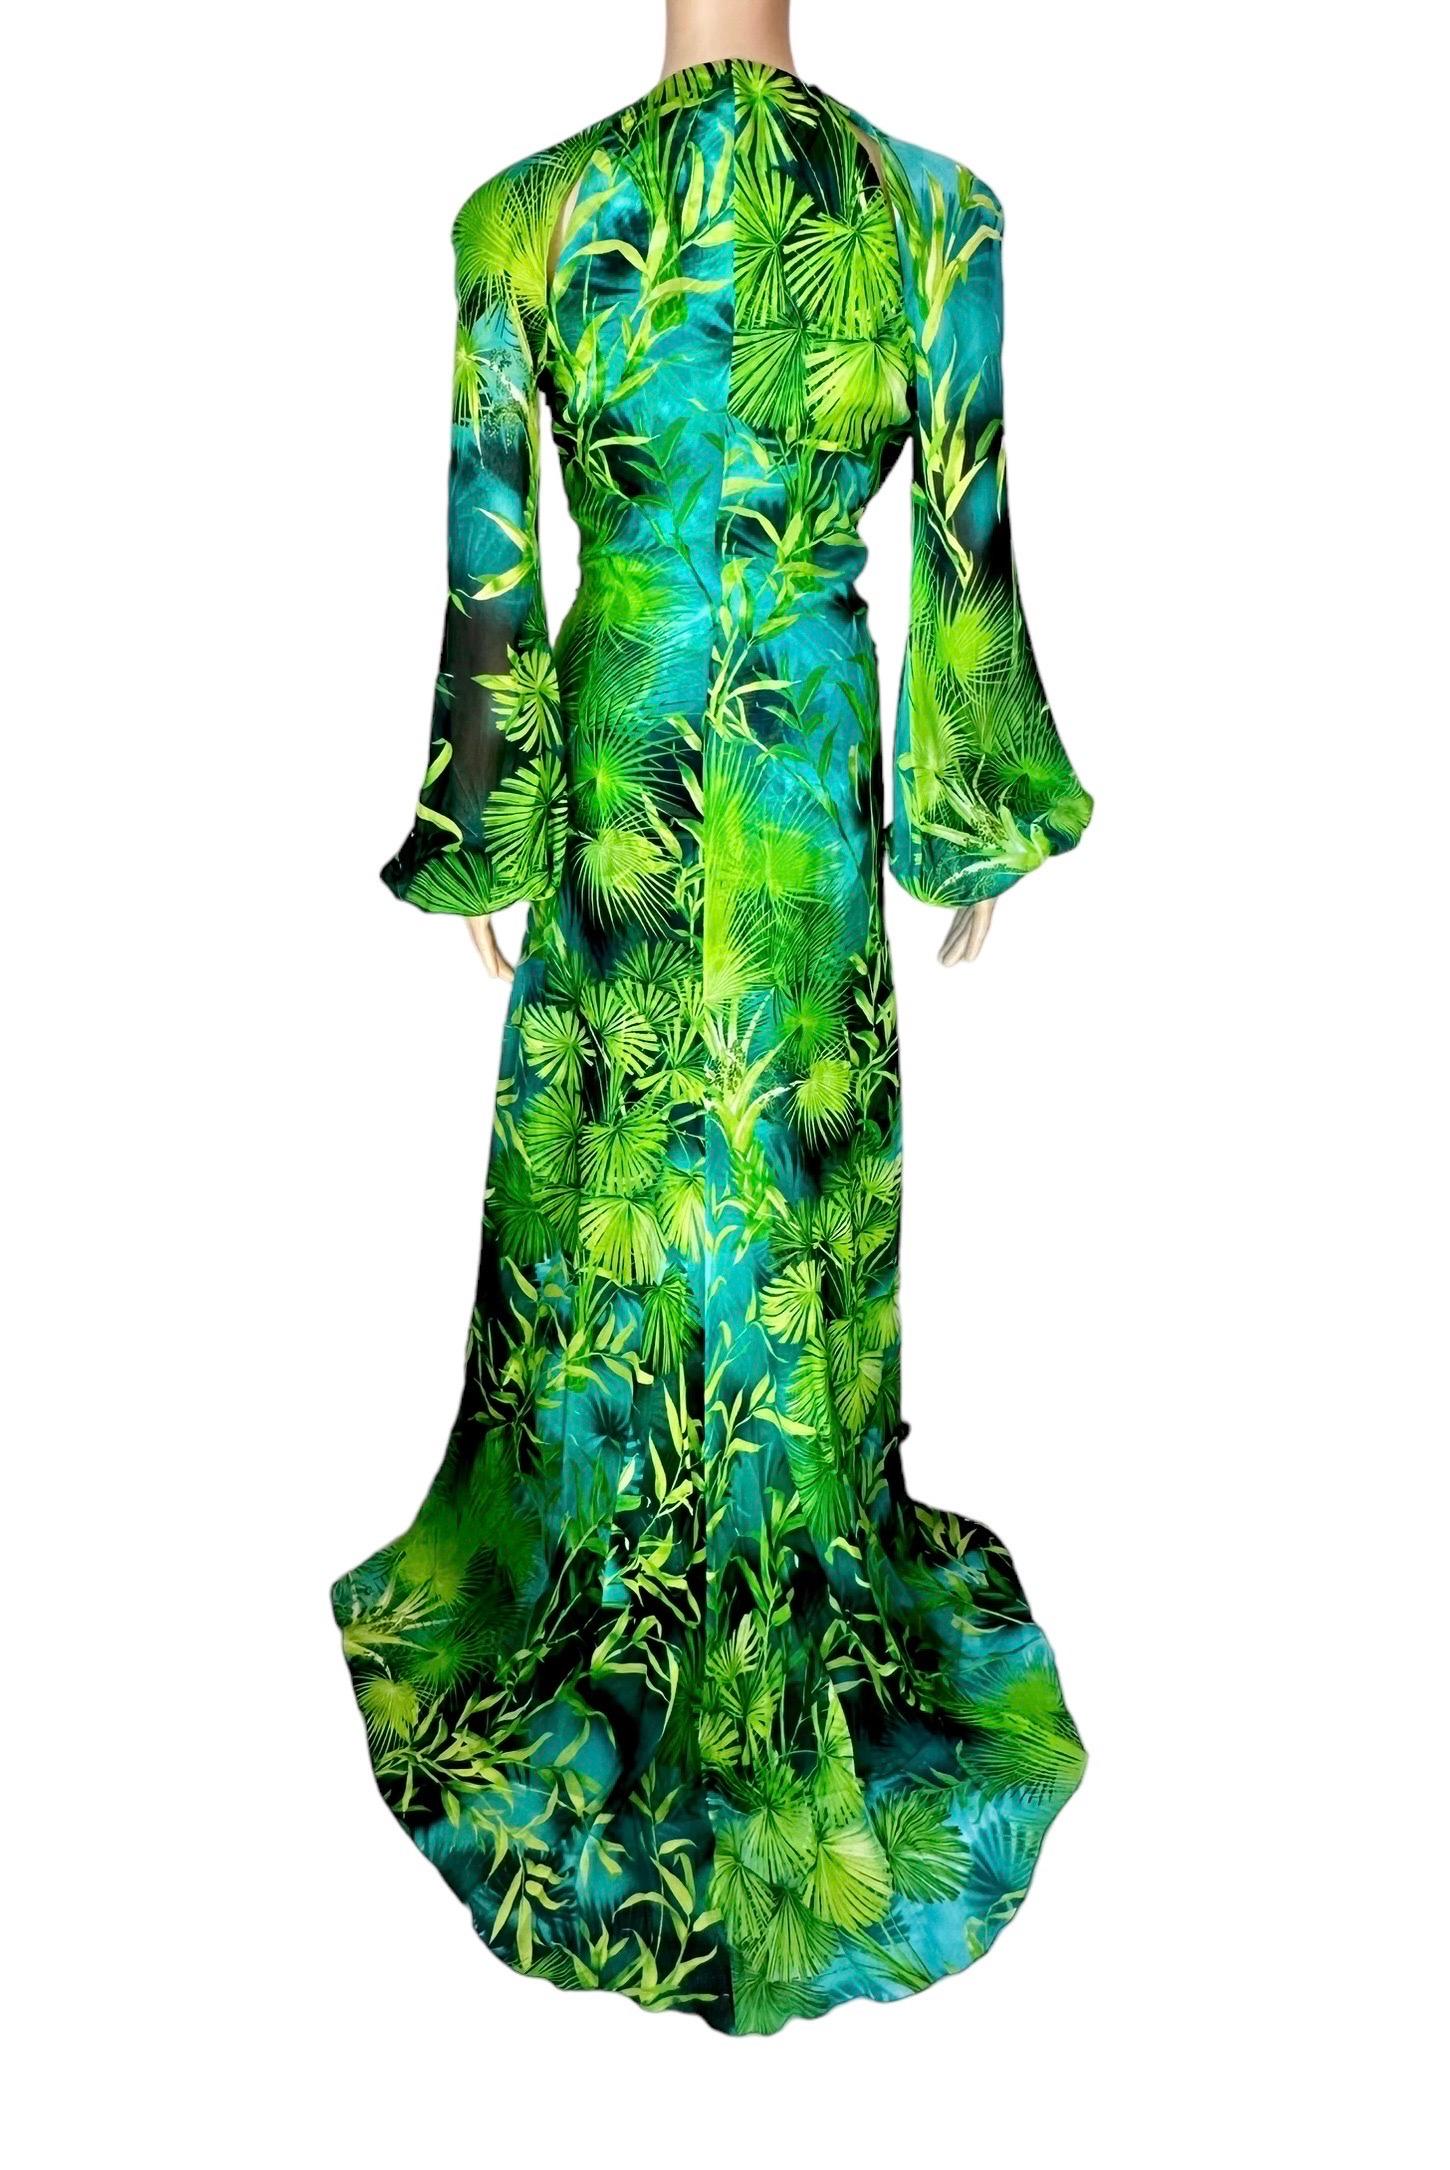 Versace S/S 2020 Plunging Jungle Print Bodysuit & Evening Dress Gown Set 1